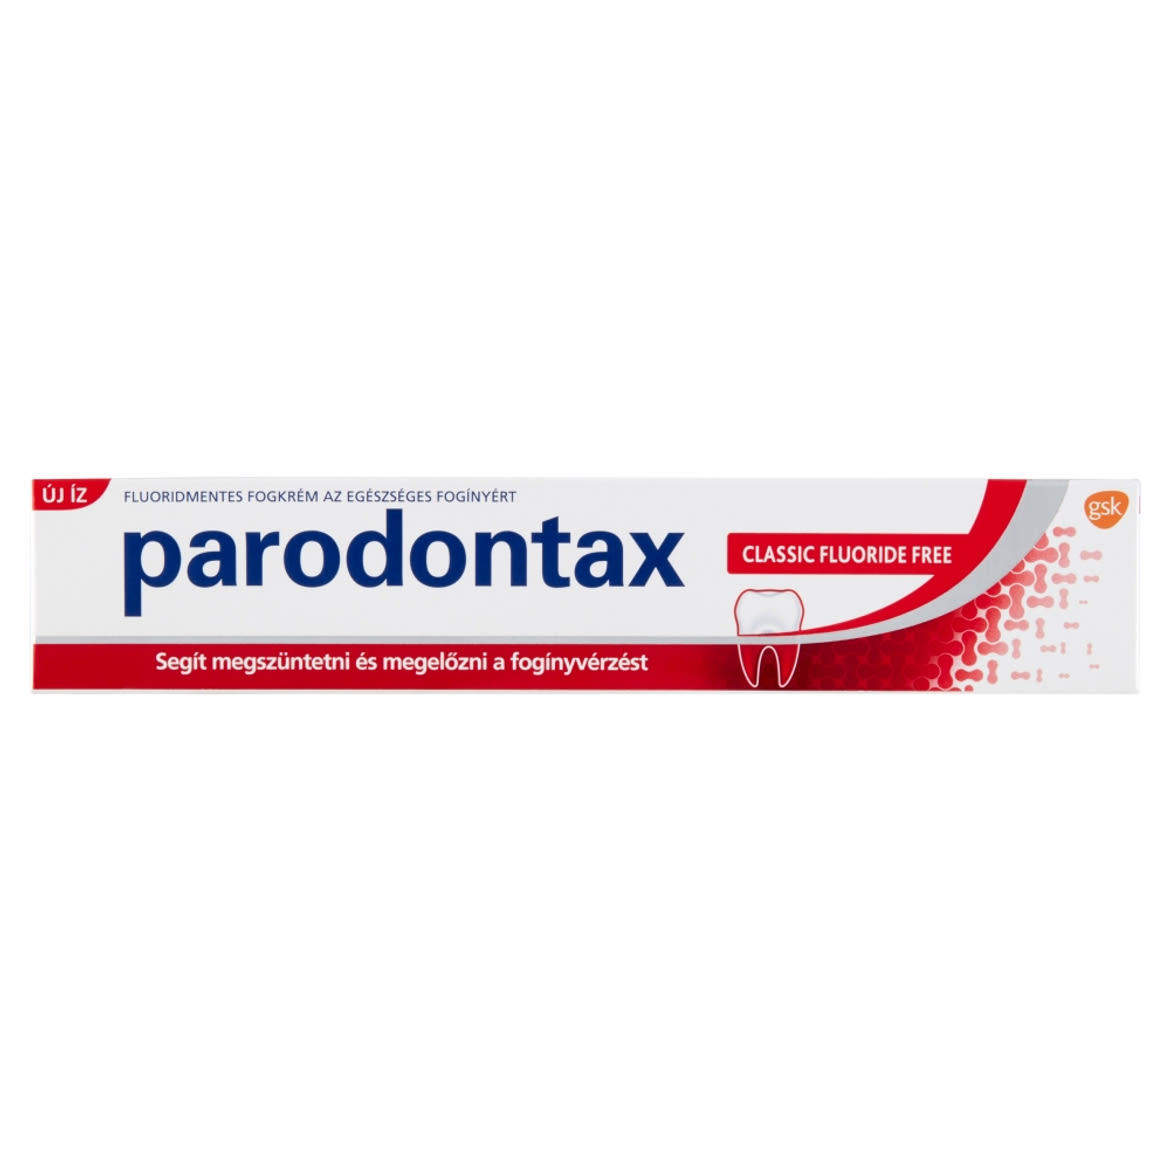 Parodontax fluoridmentes fogkrém